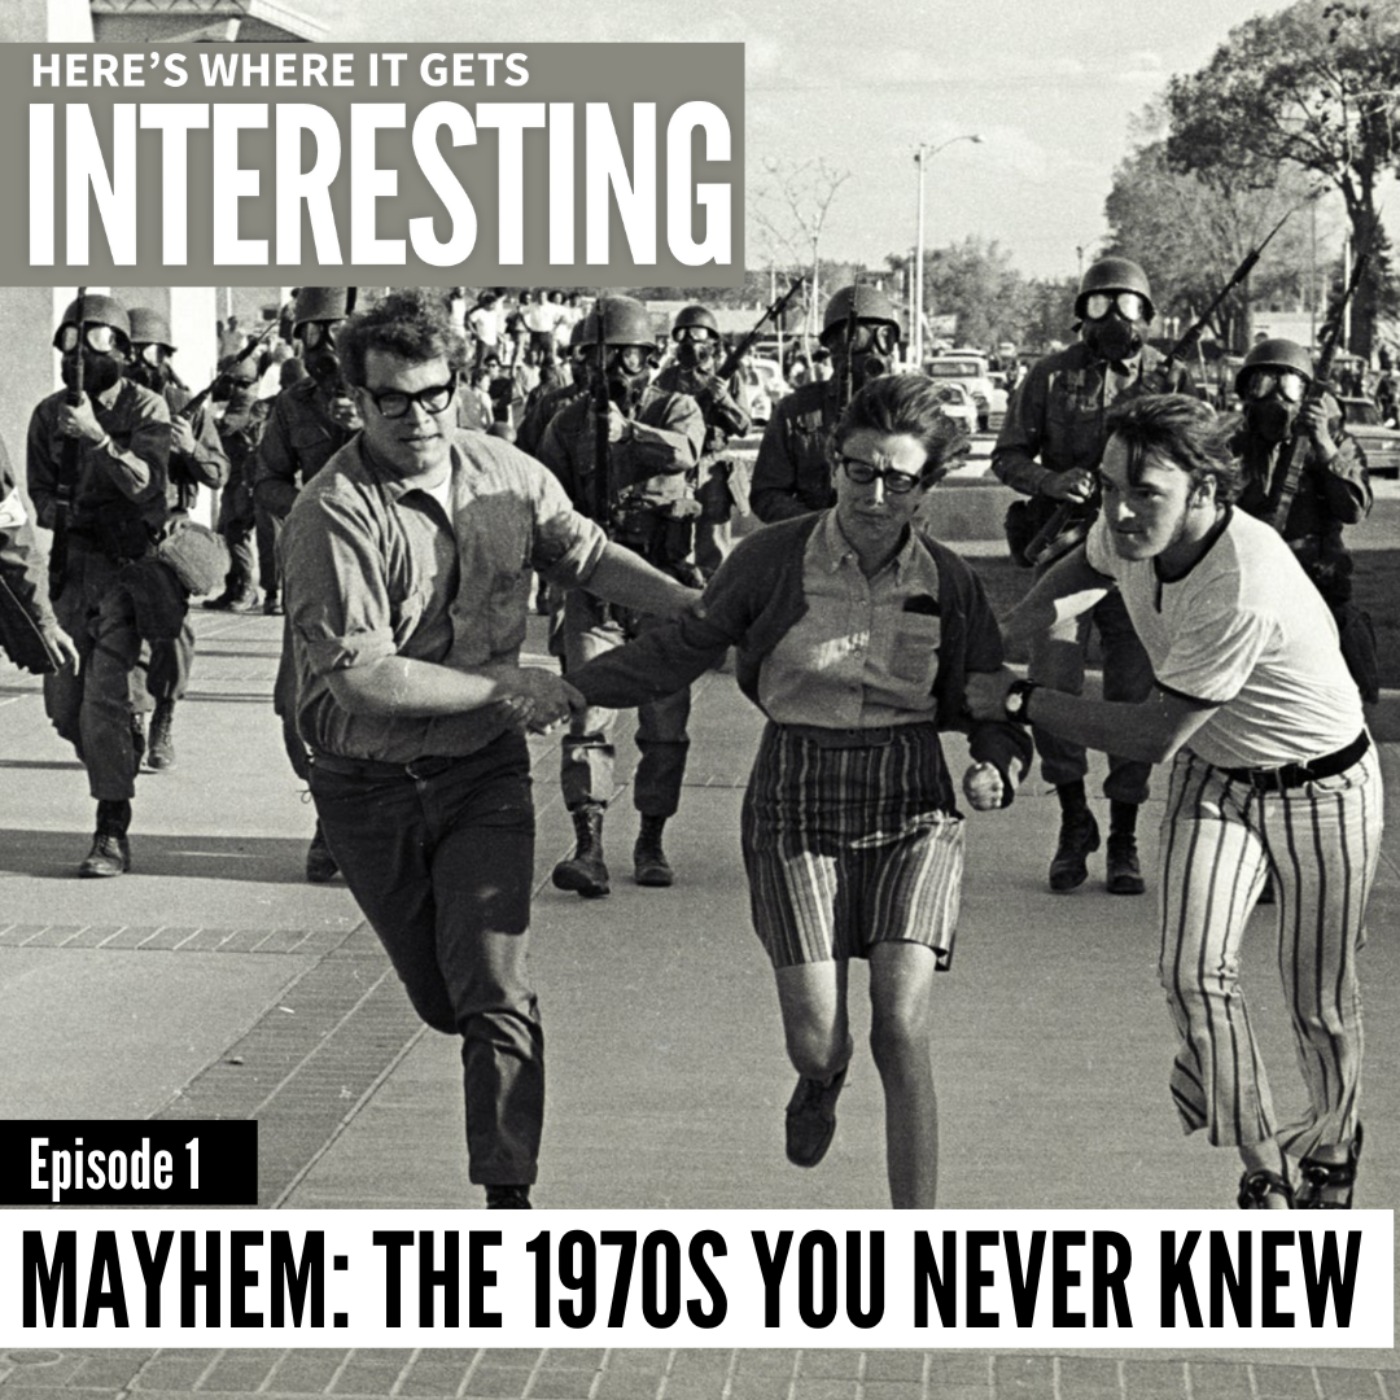 Mayhem: The 1970s You Never Knew, Episode 1